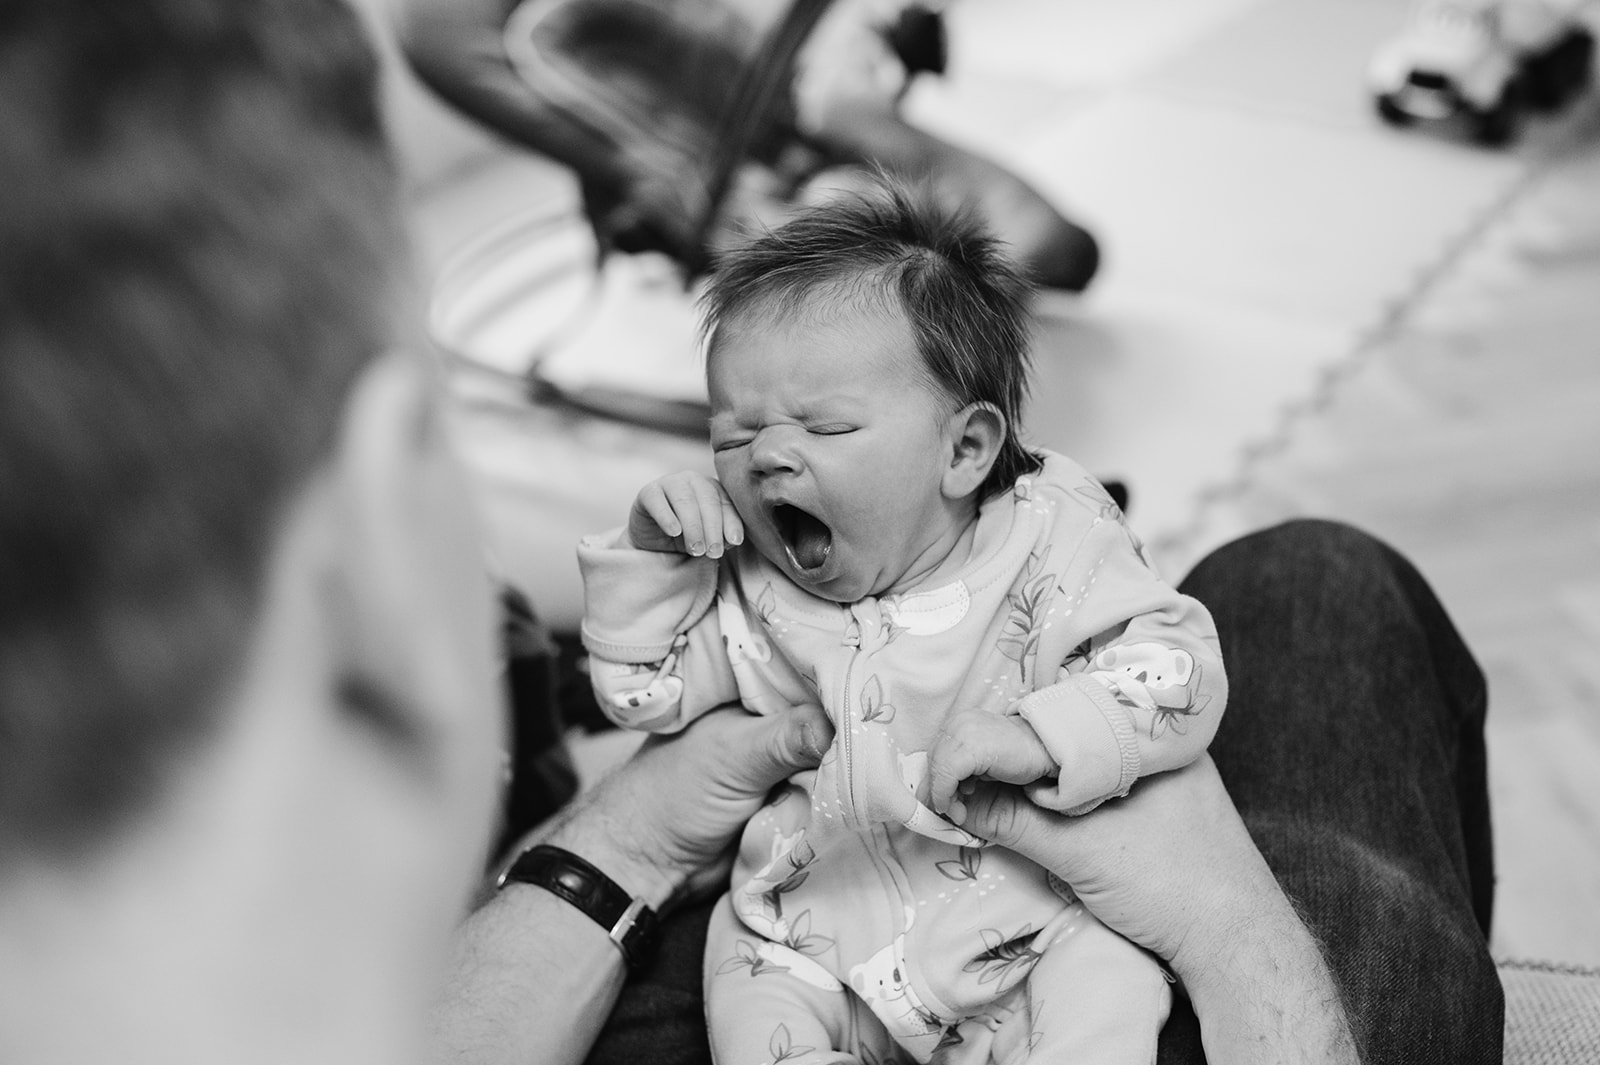 newborn yawning while lying on his dads lap